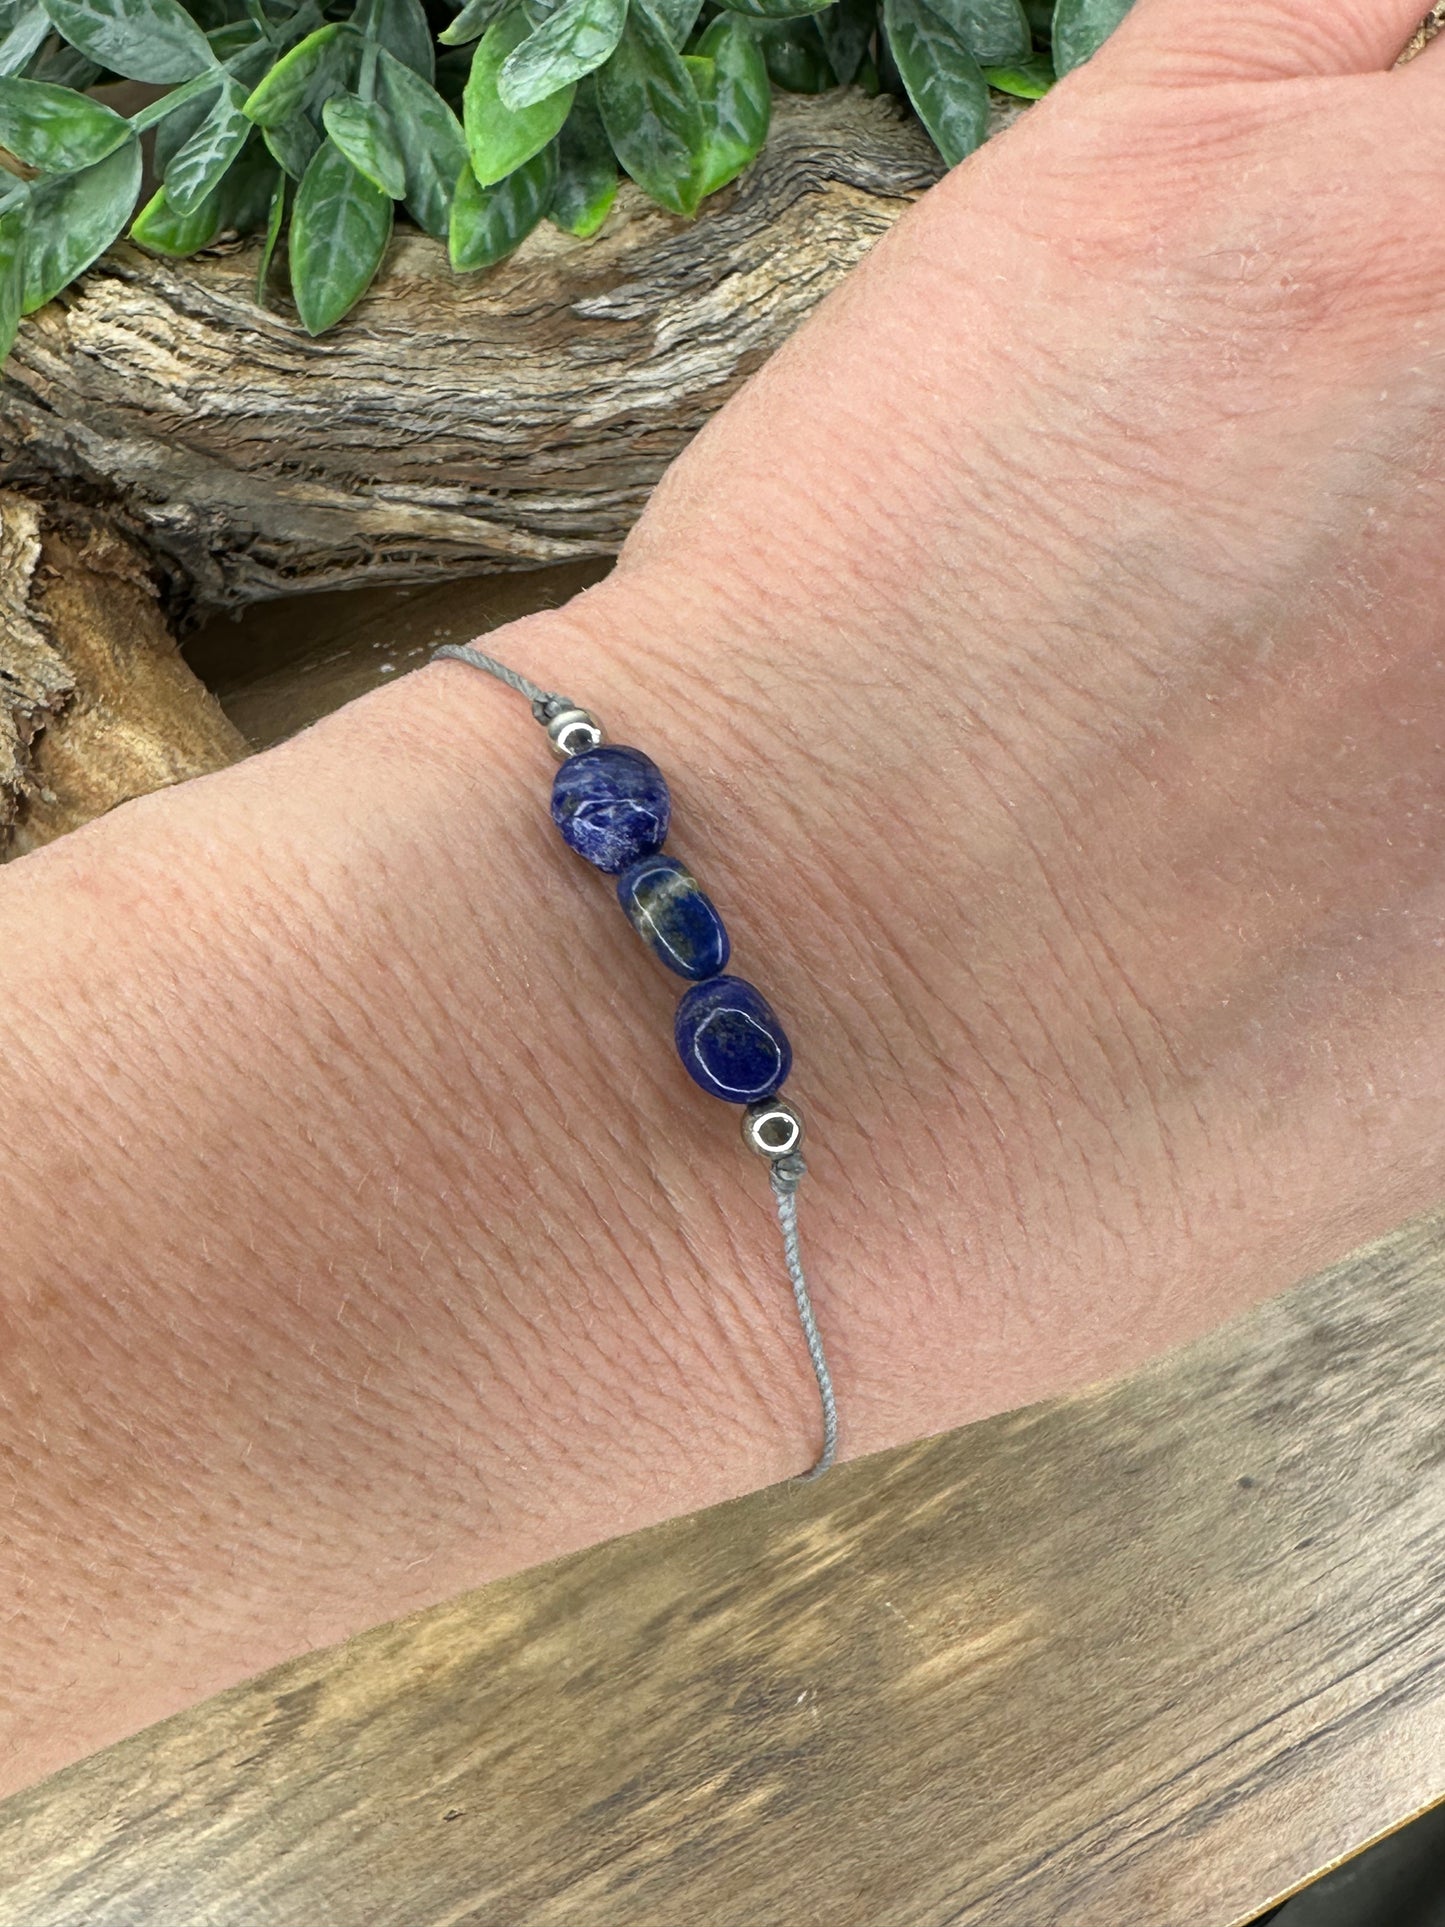 Blue Lapis Lazuli Slider Bracelet natural rough polished gemstone Crystals Sapphire alternative September birthstone one size fits all